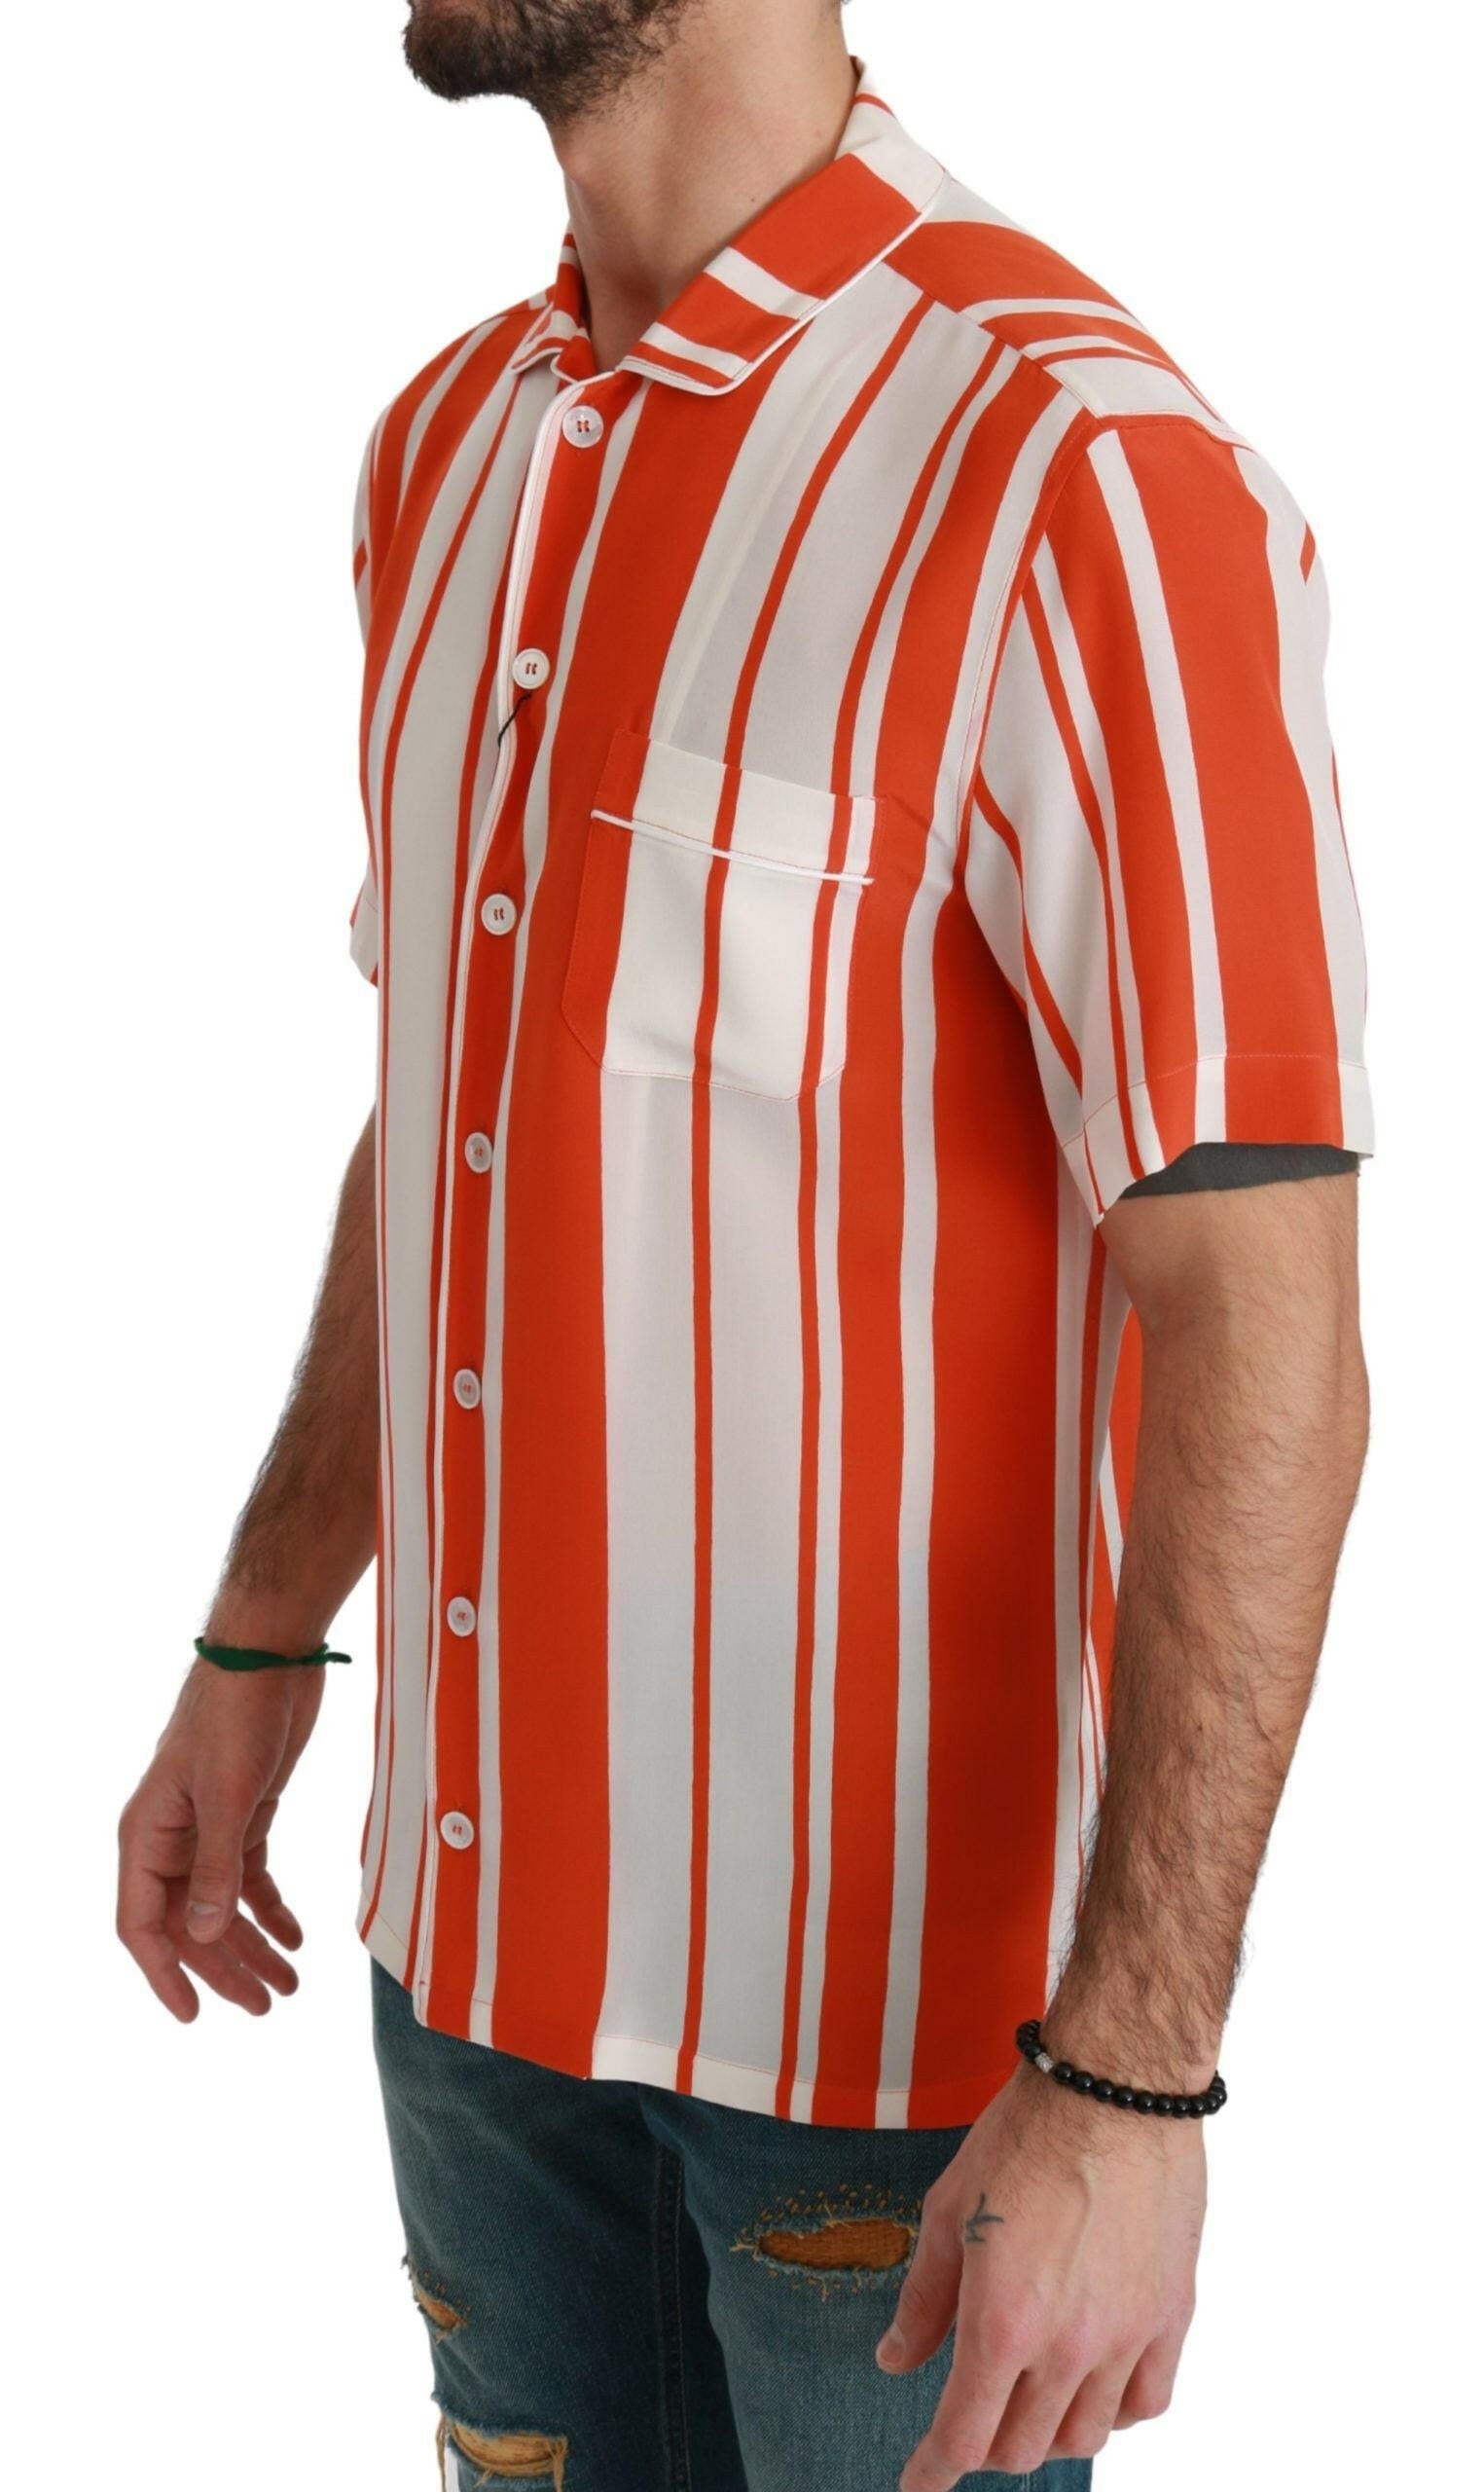 Dolce & Gabbana Orange Silk Striped Short Sleeve White Shirt - GENUINE AUTHENTIC BRAND LLC  